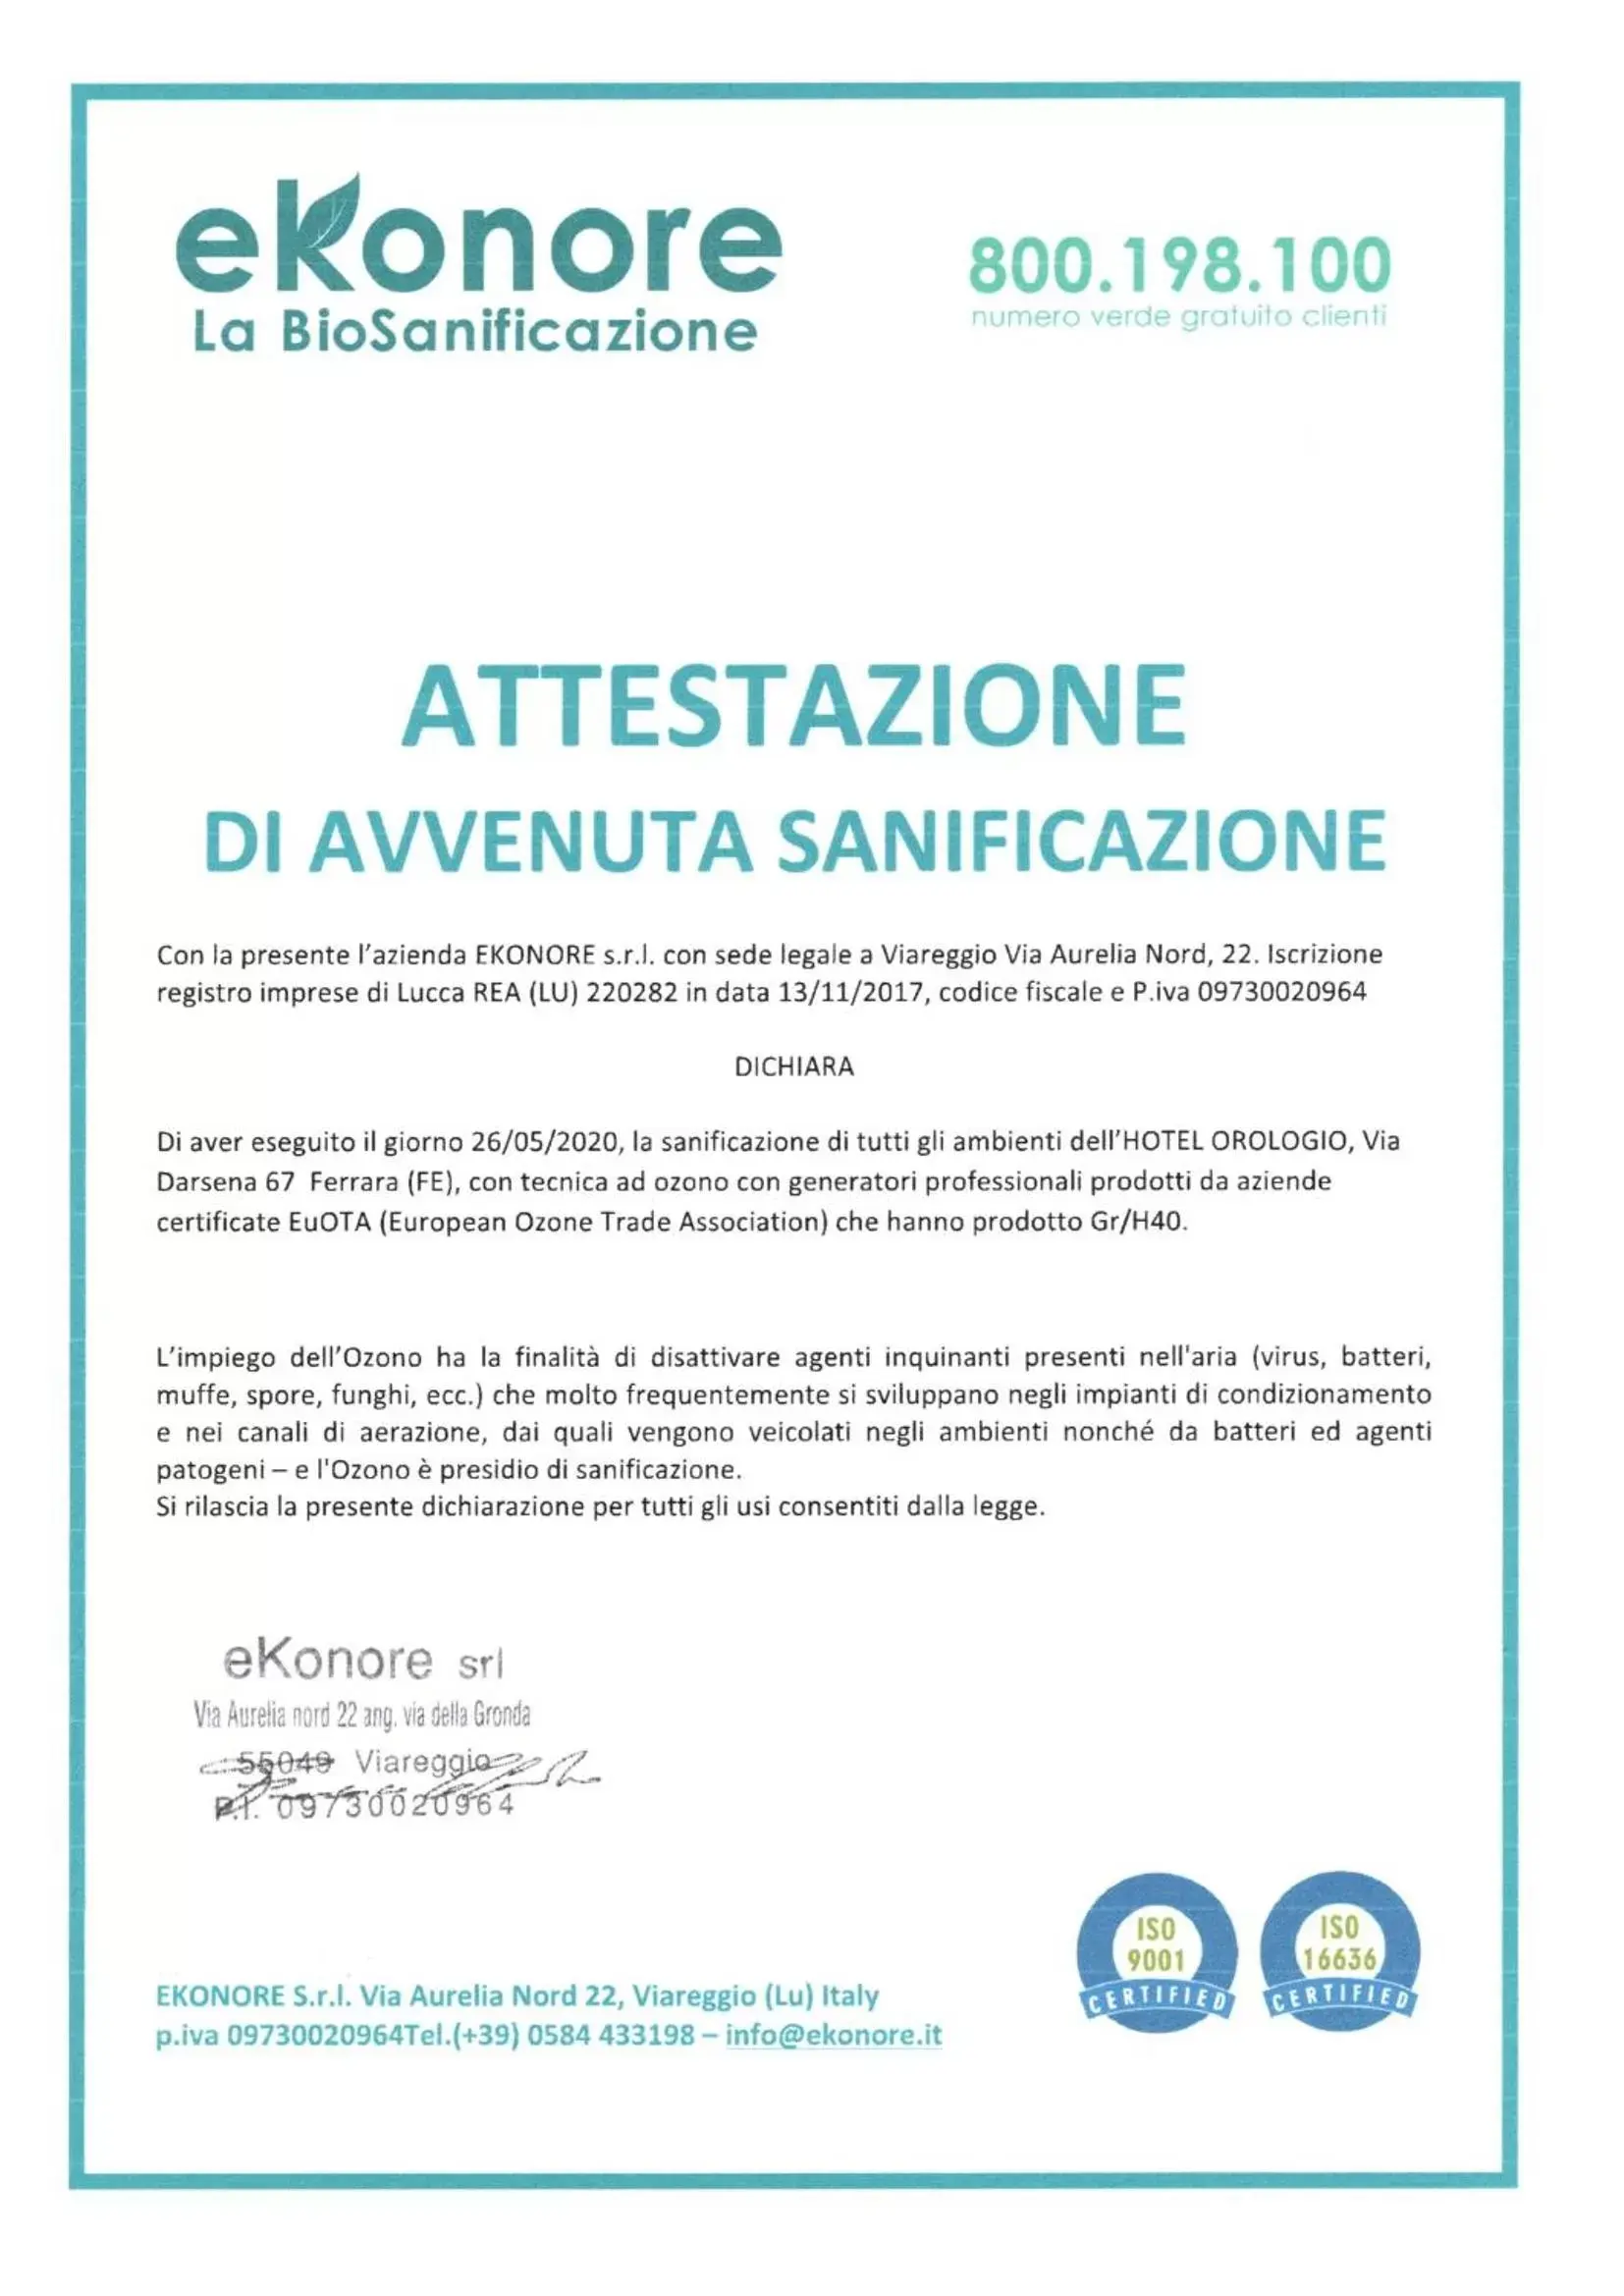 Certificate/Award in Hotel Orologio